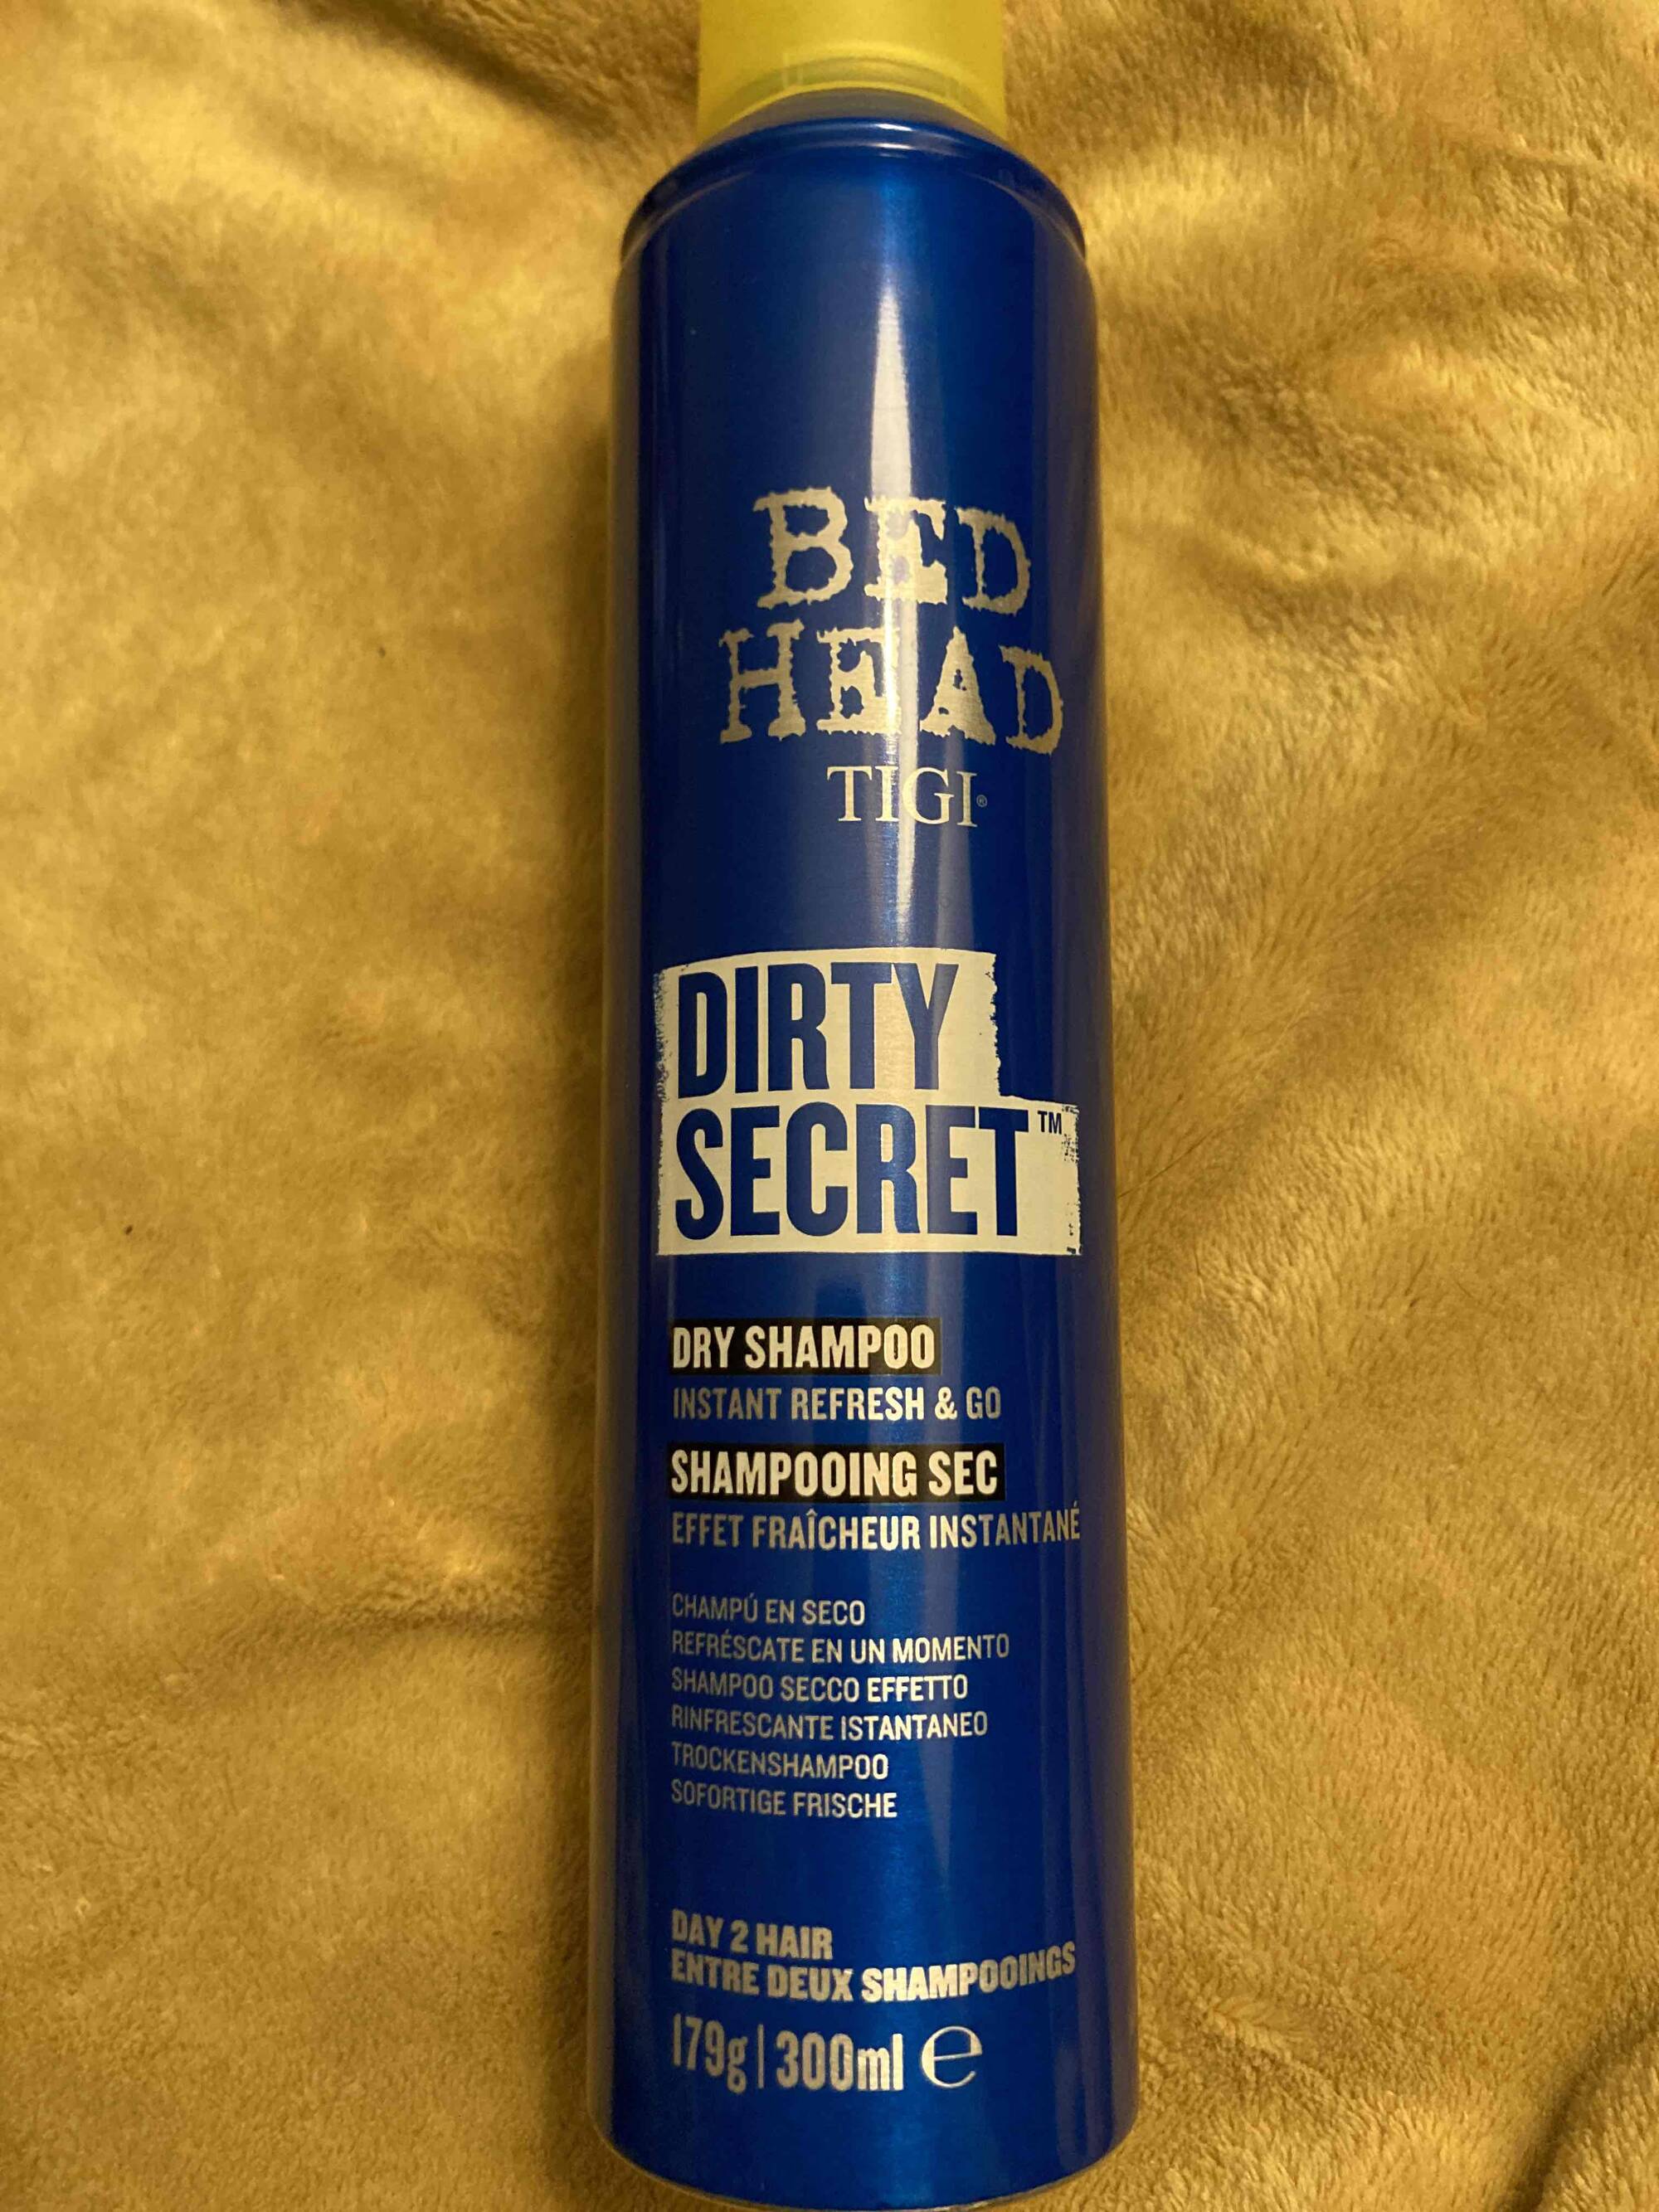 TIGI - Bed head dirty secret - Shampooing sec